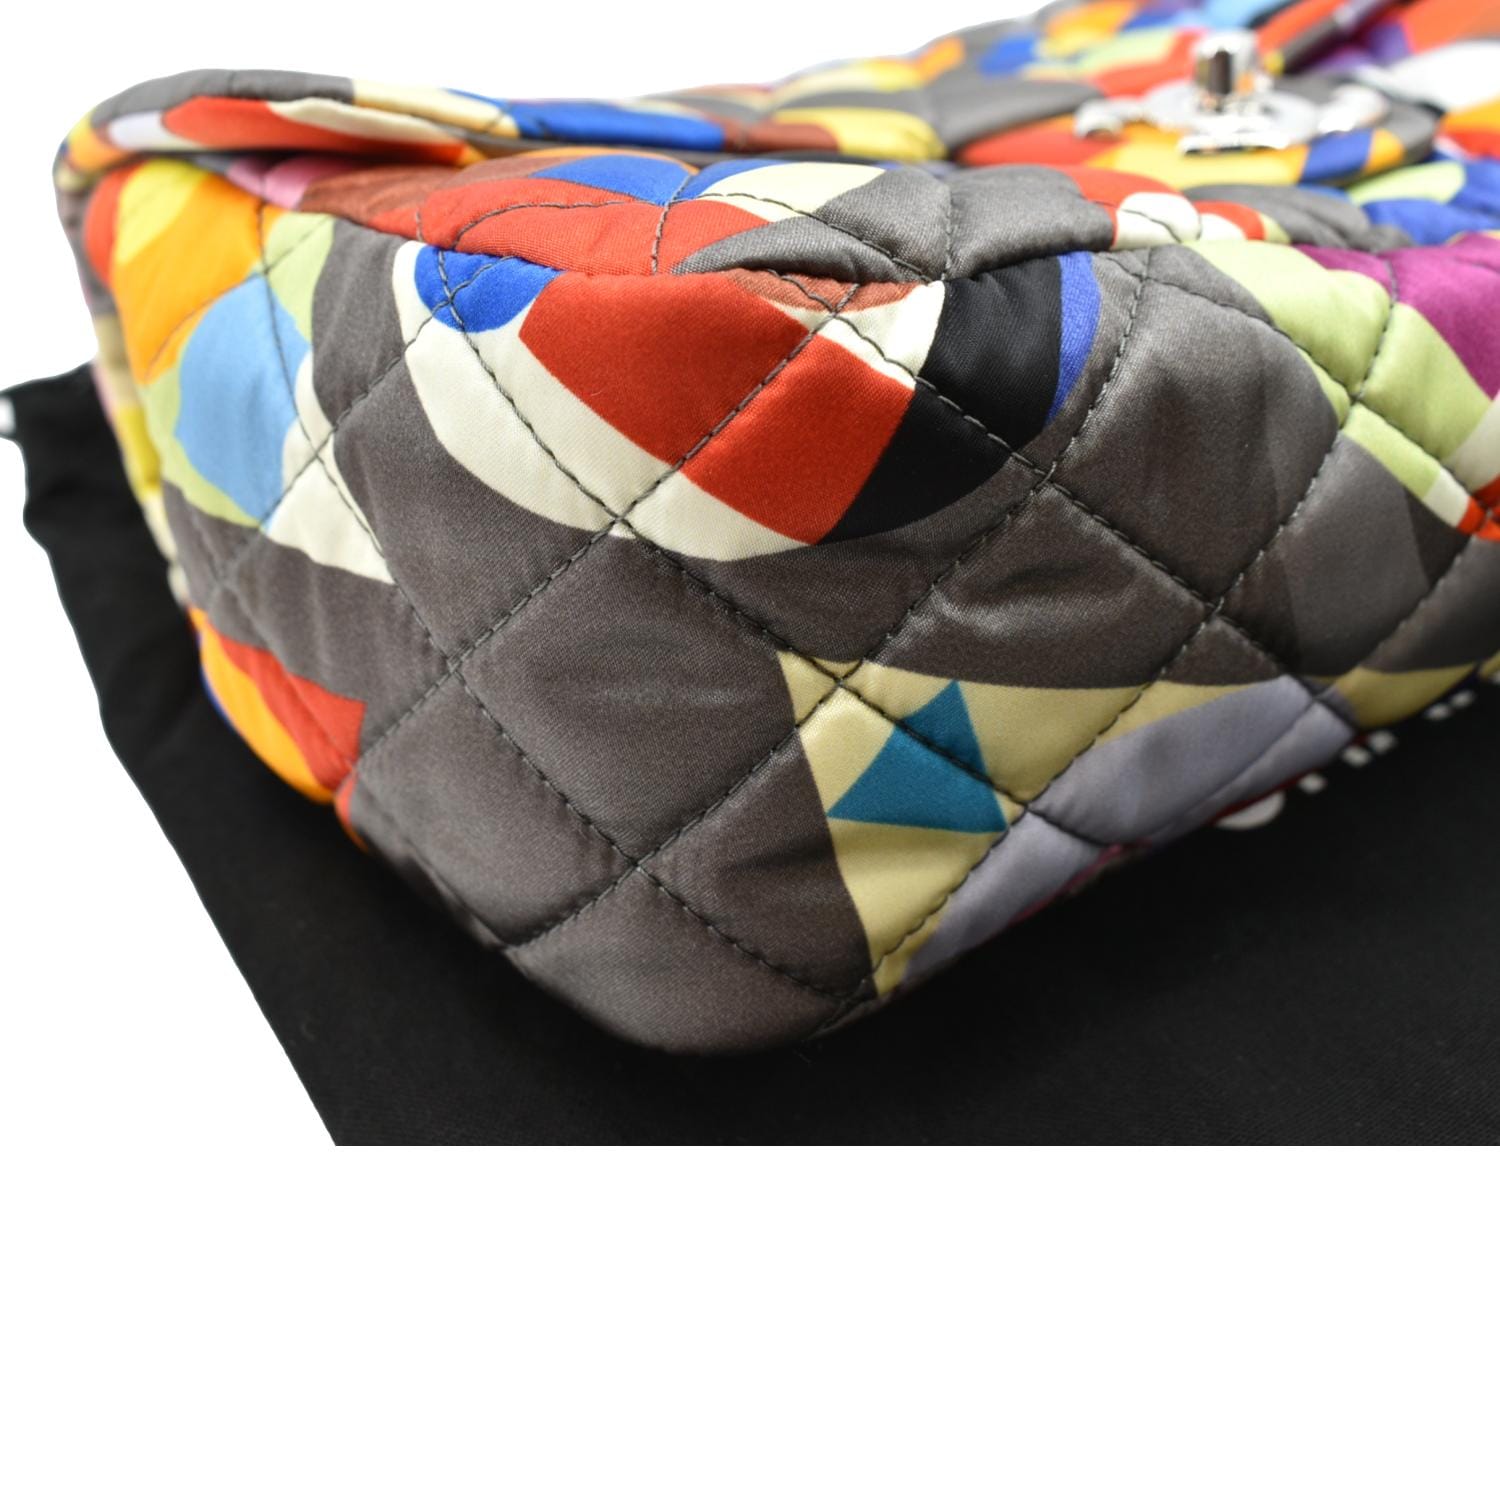 Chanel Printed Coco Color Flap Small Nylon Shoulder Bag